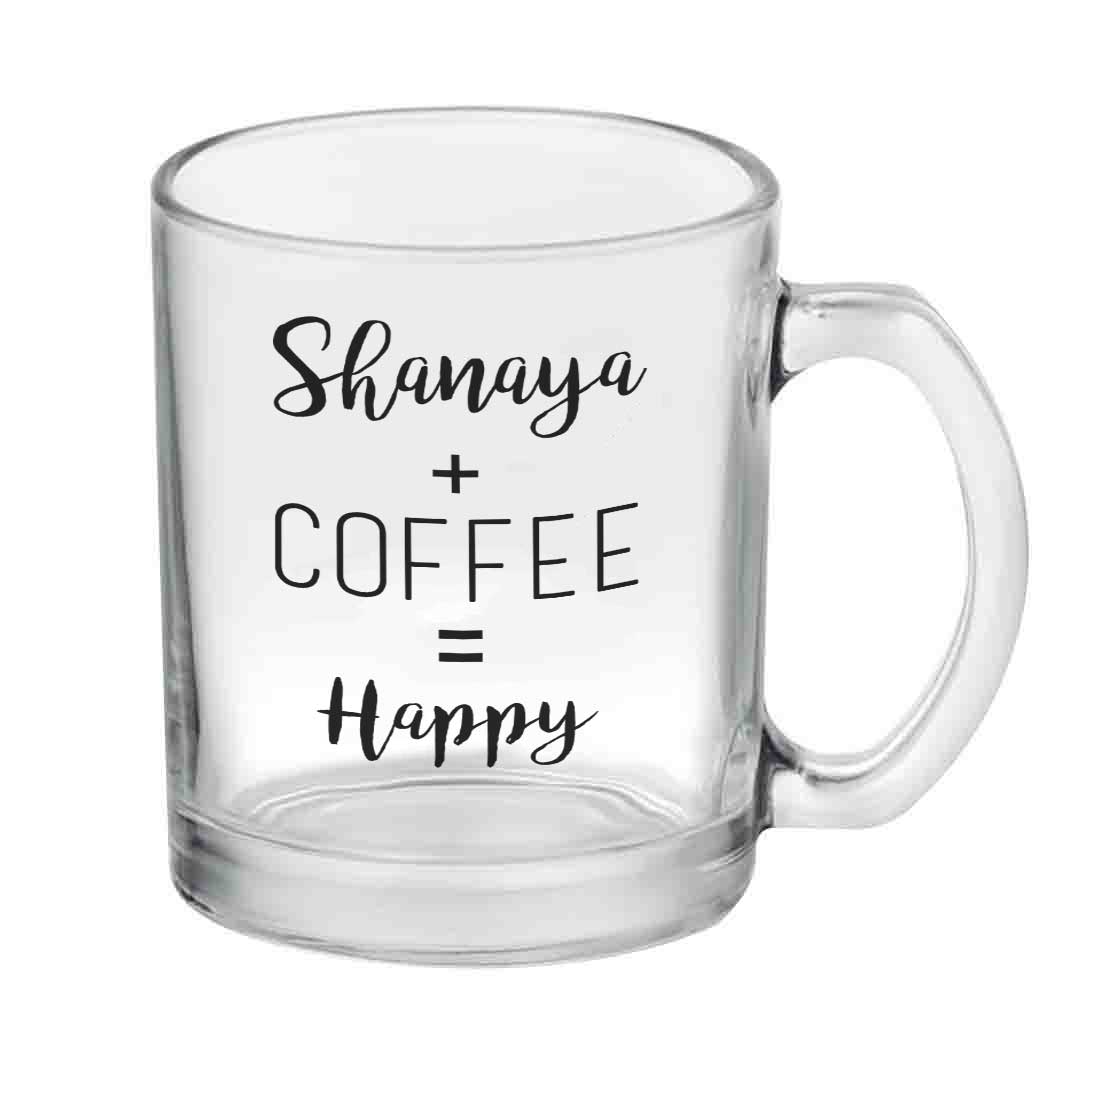 Personalised Glass Tea Cups for Coffee Glass Mug Add Name - Happy